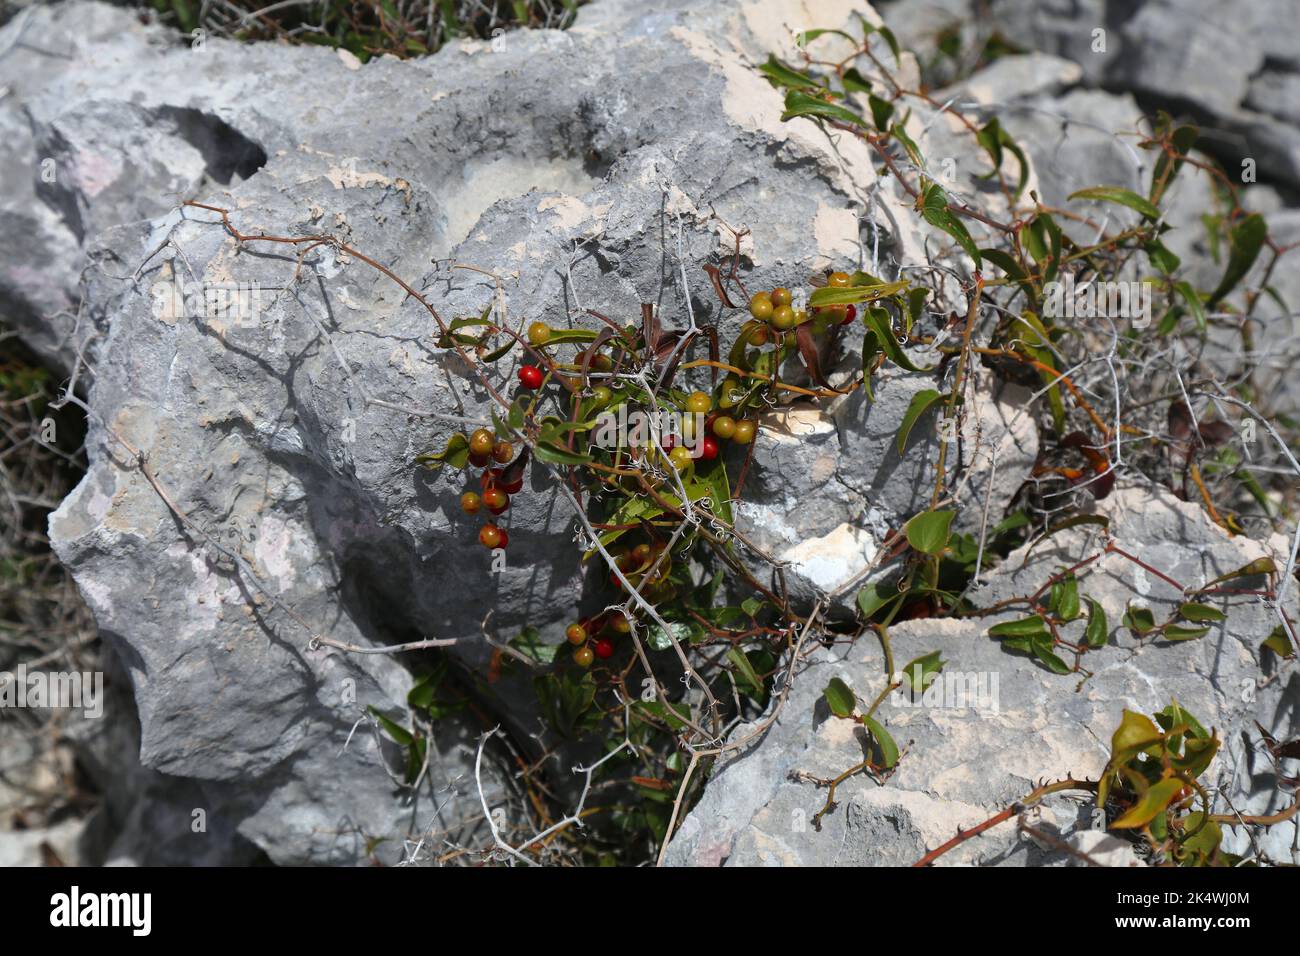 Croatia Zirje island nature in summer. Mediterranean plant species: fruit on Smilax Aspera (rough bindweed). Flowering vine in greenbriar family. Stock Photo